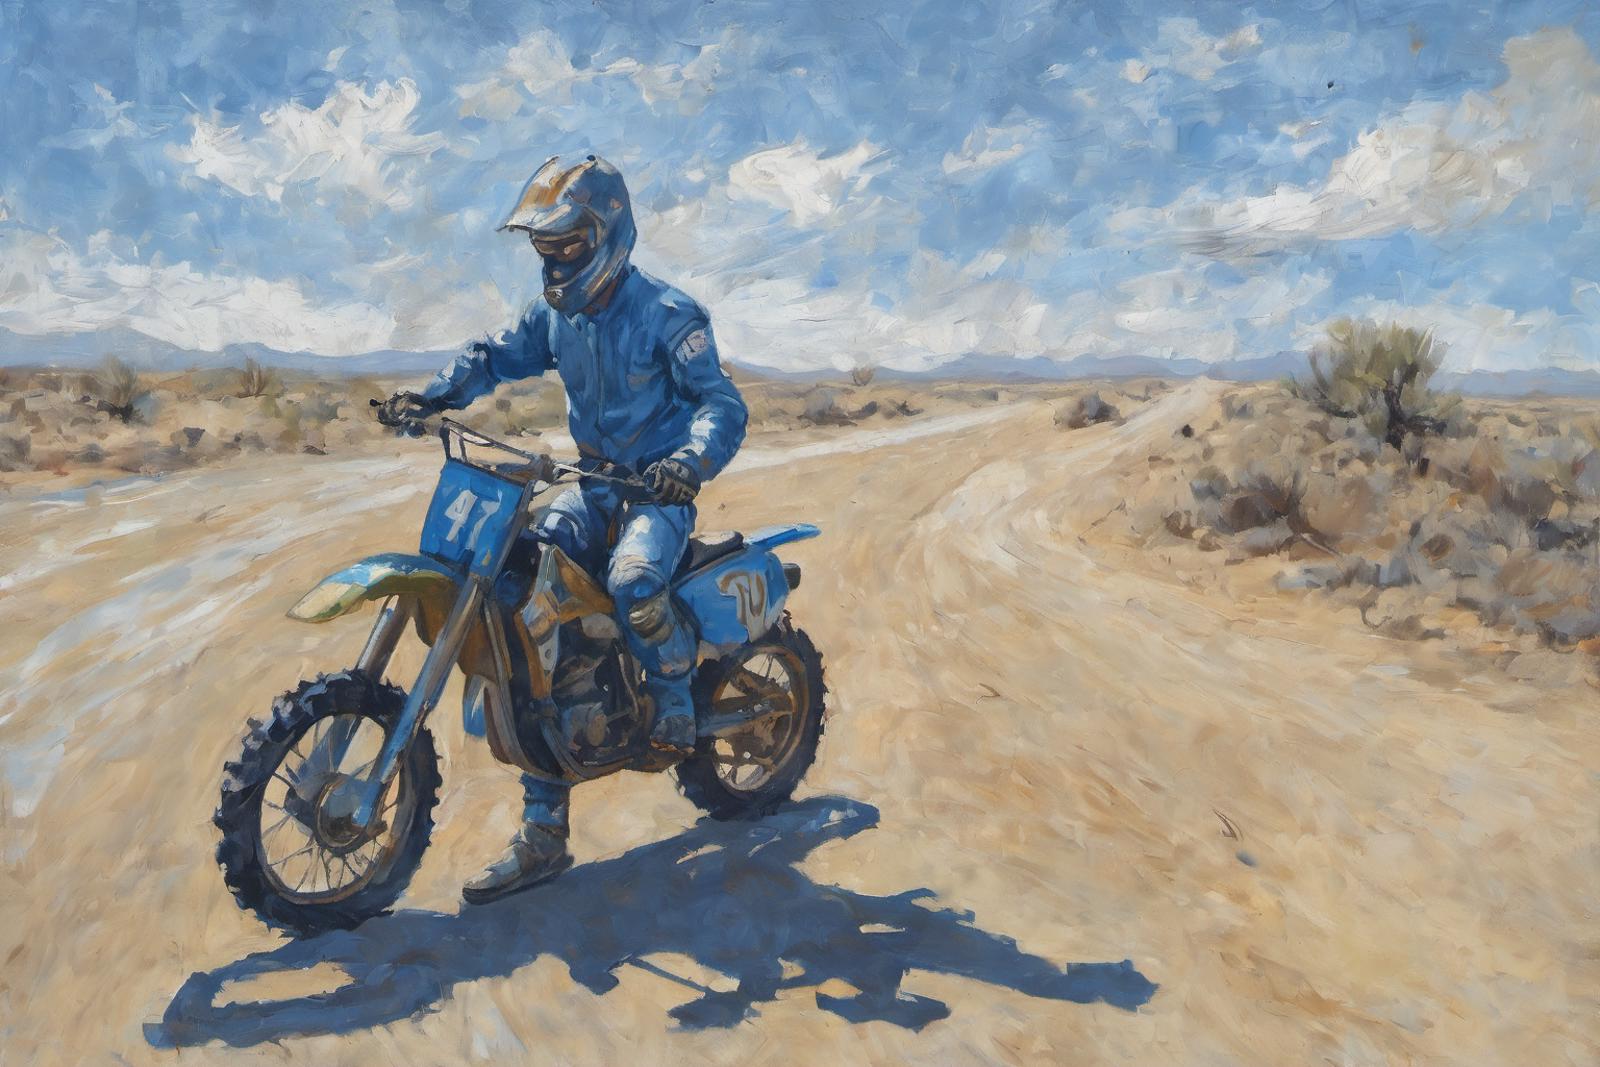 A man riding a blue dirt bike on a dirt road.